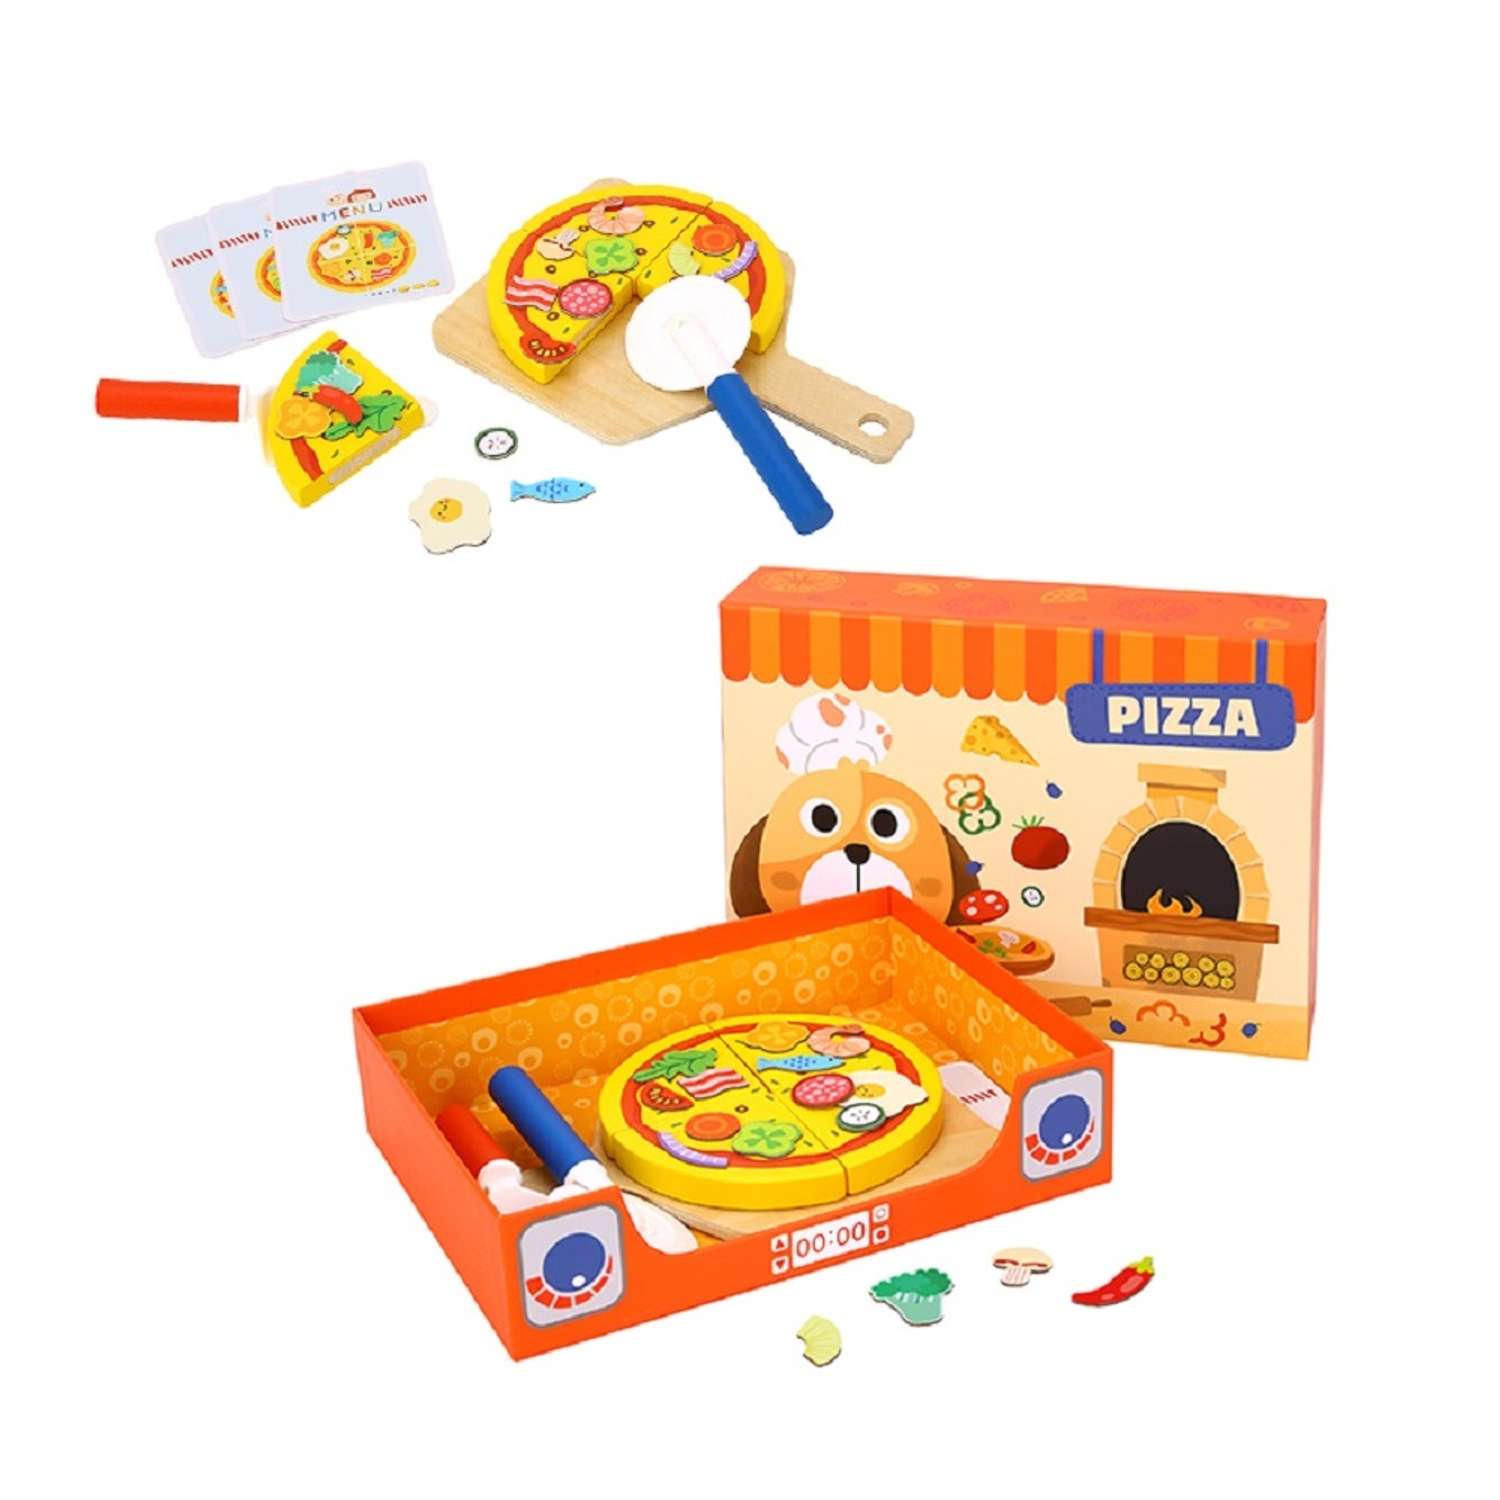 Игровой набор Tooky Toy TH226 Готовим пиццу - фото 3